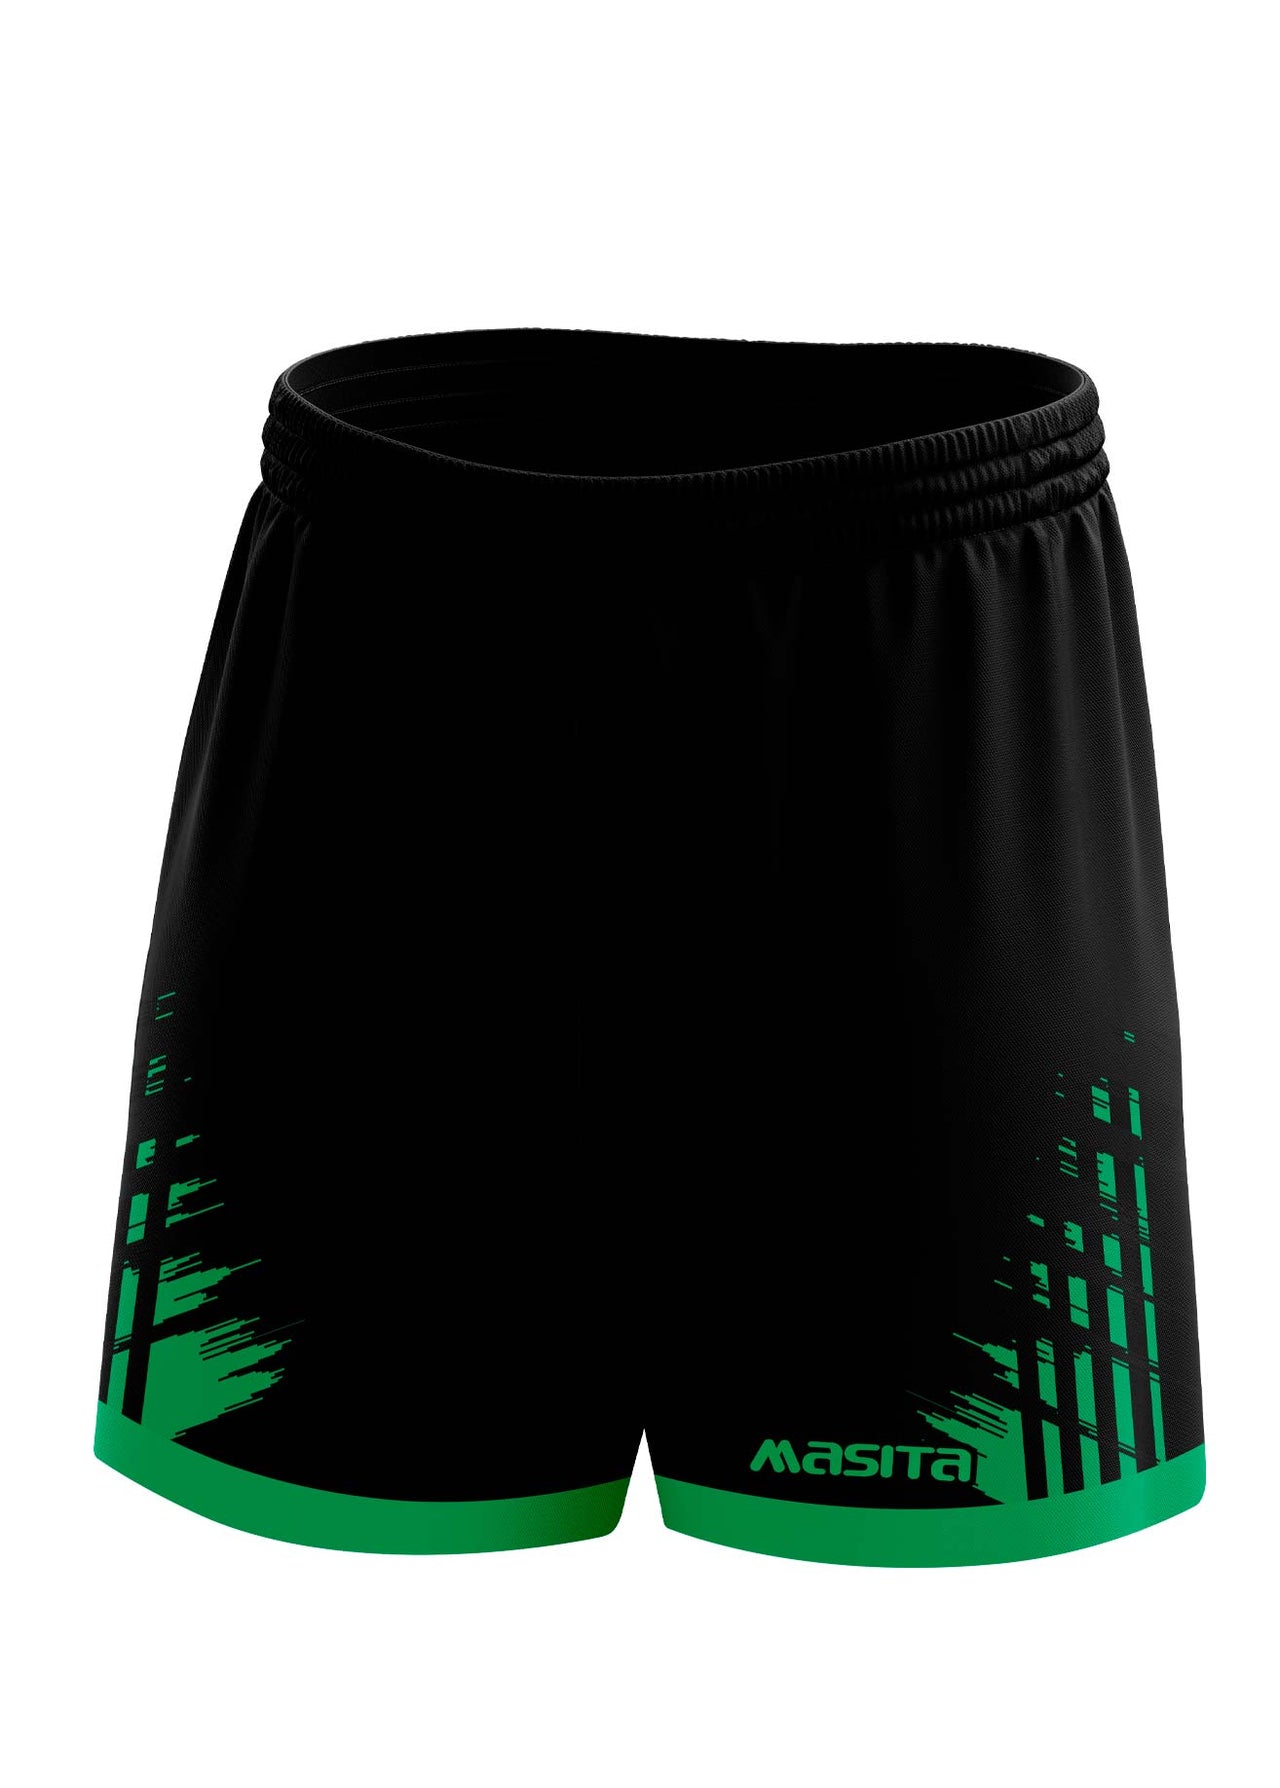 Barkley Gaelic Shorts Black/Green Adult